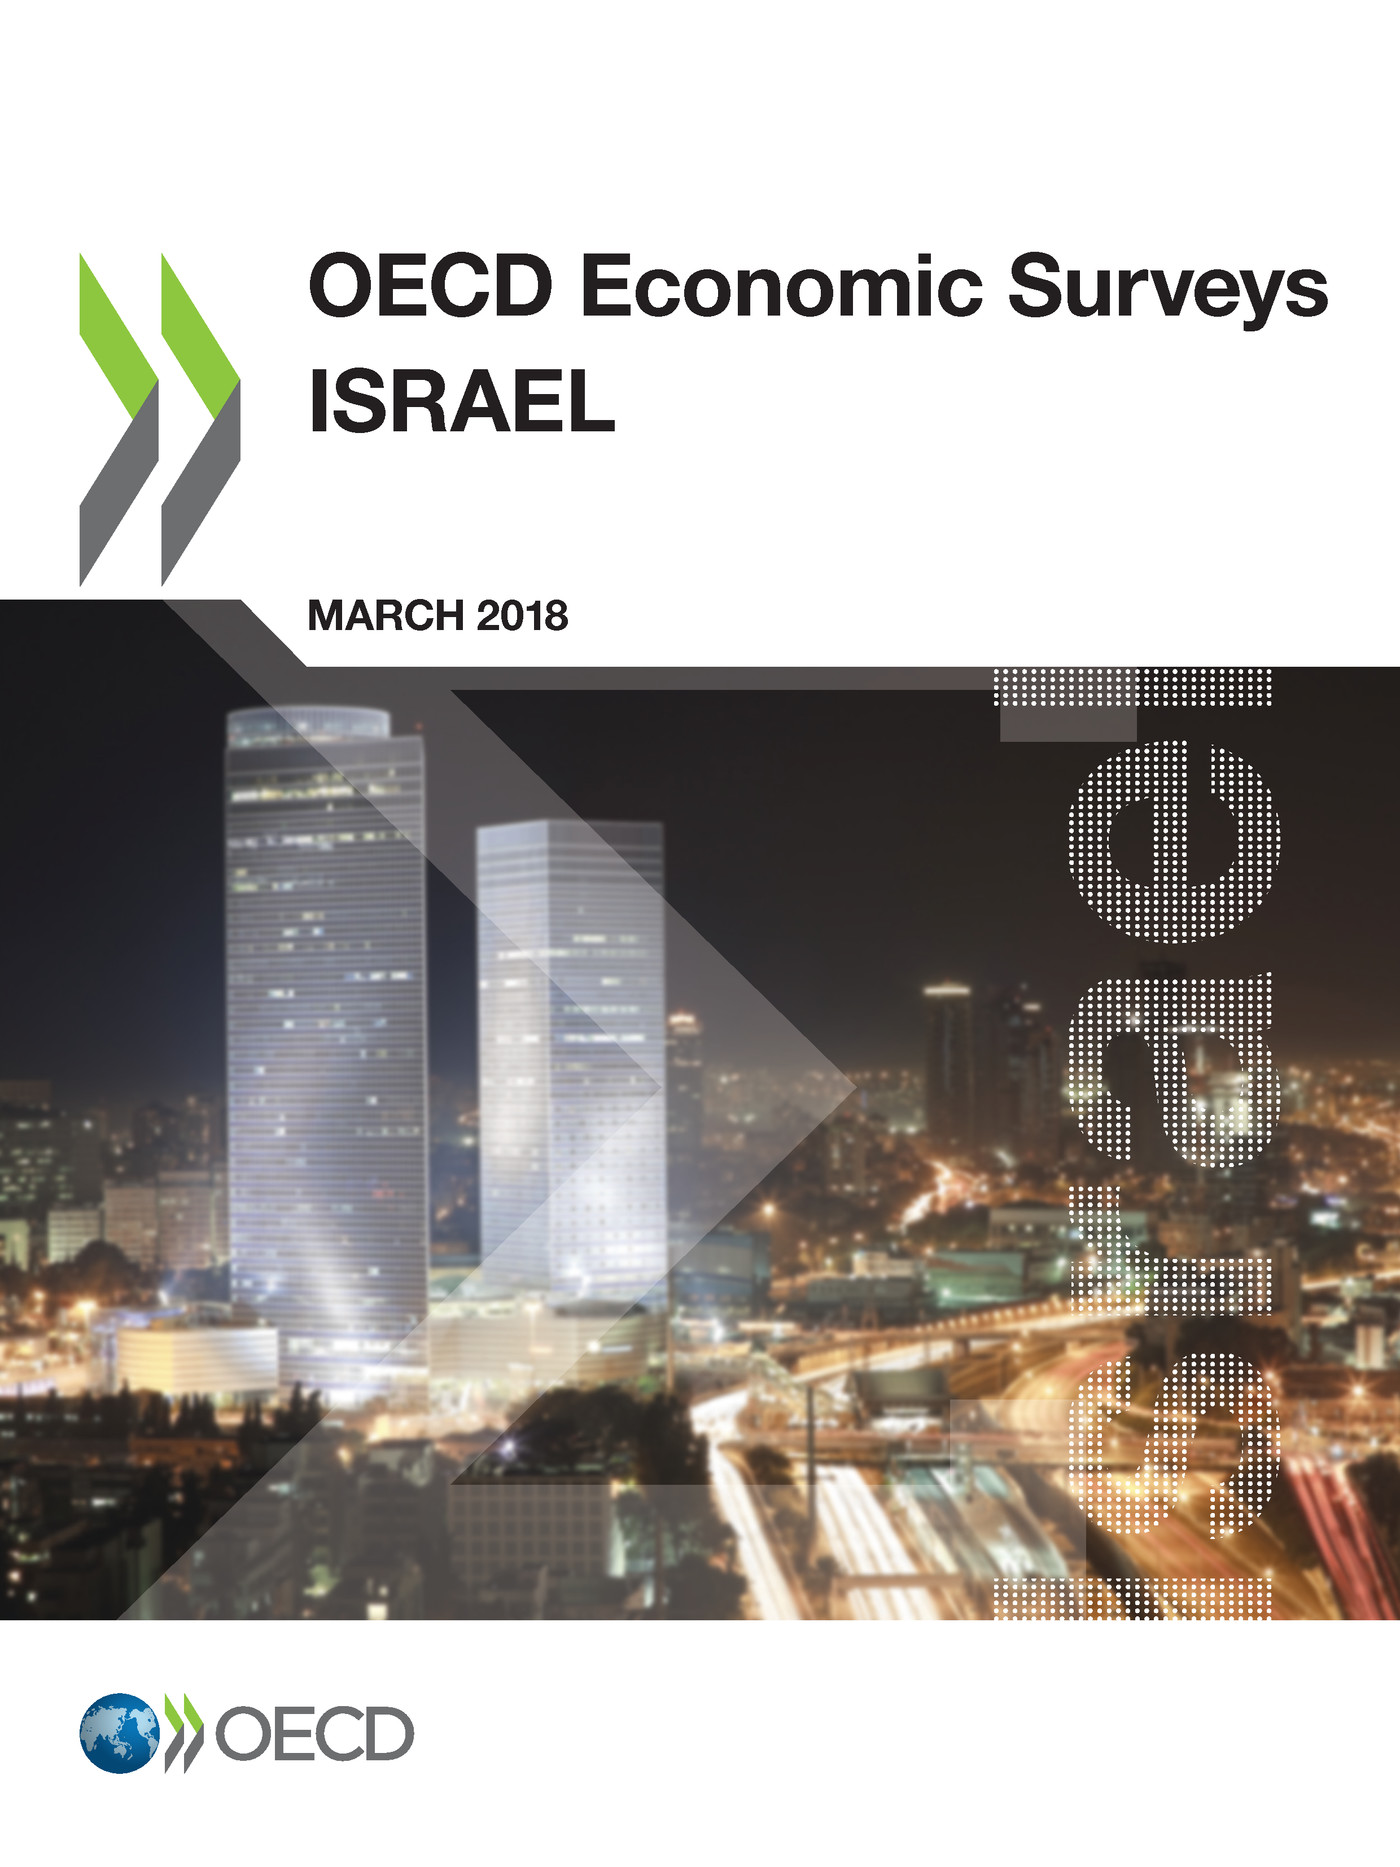 OECD Economic Surveys: Israel 2018 -  Collectif - OCDE / OECD